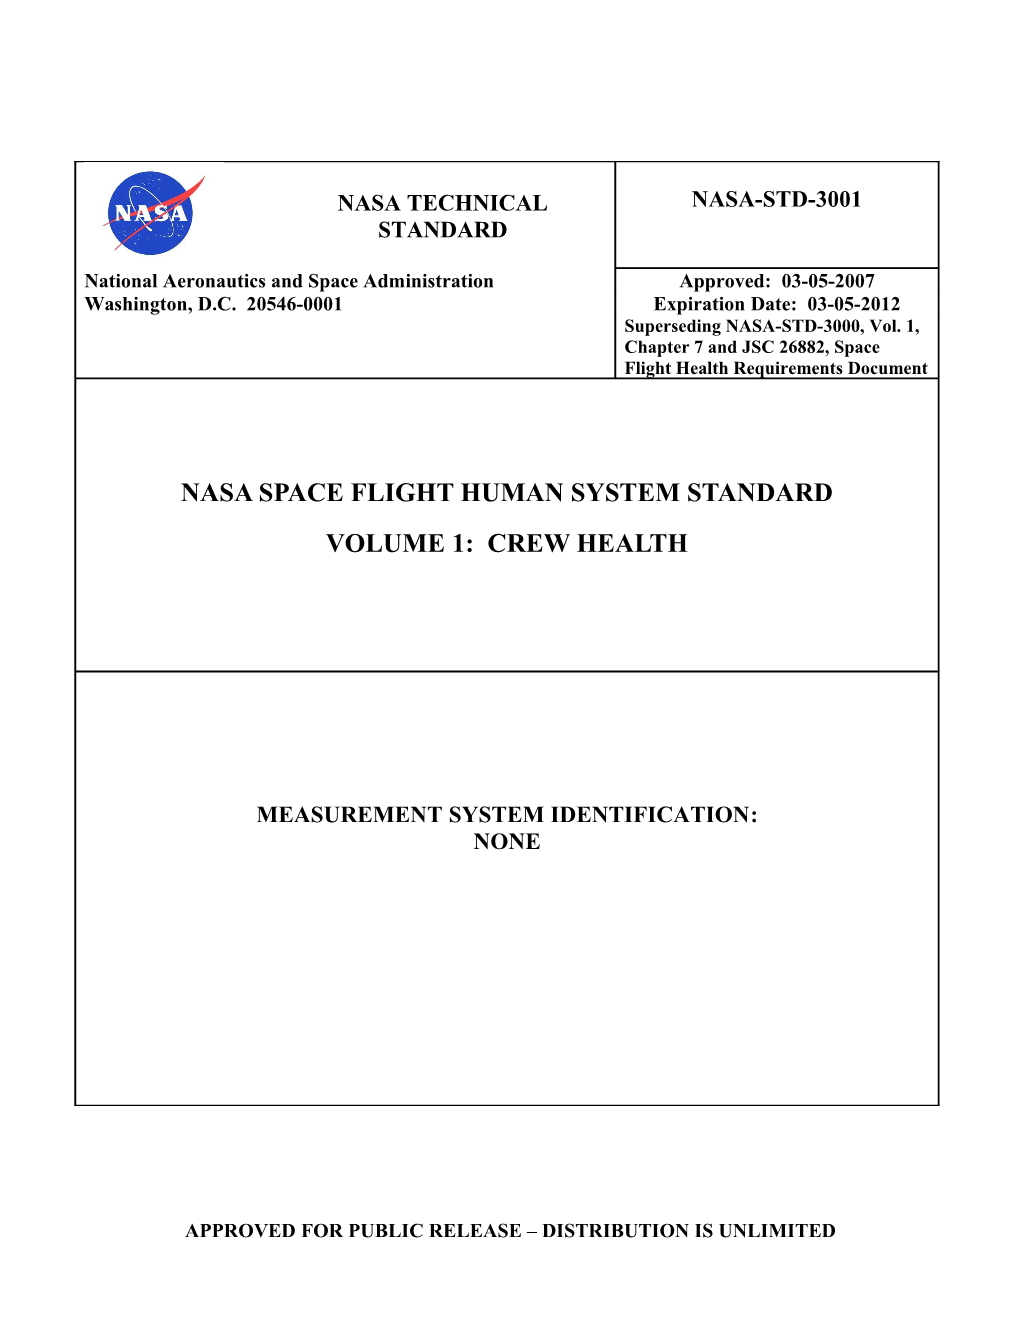 NASA-STD-3001, Volume 1